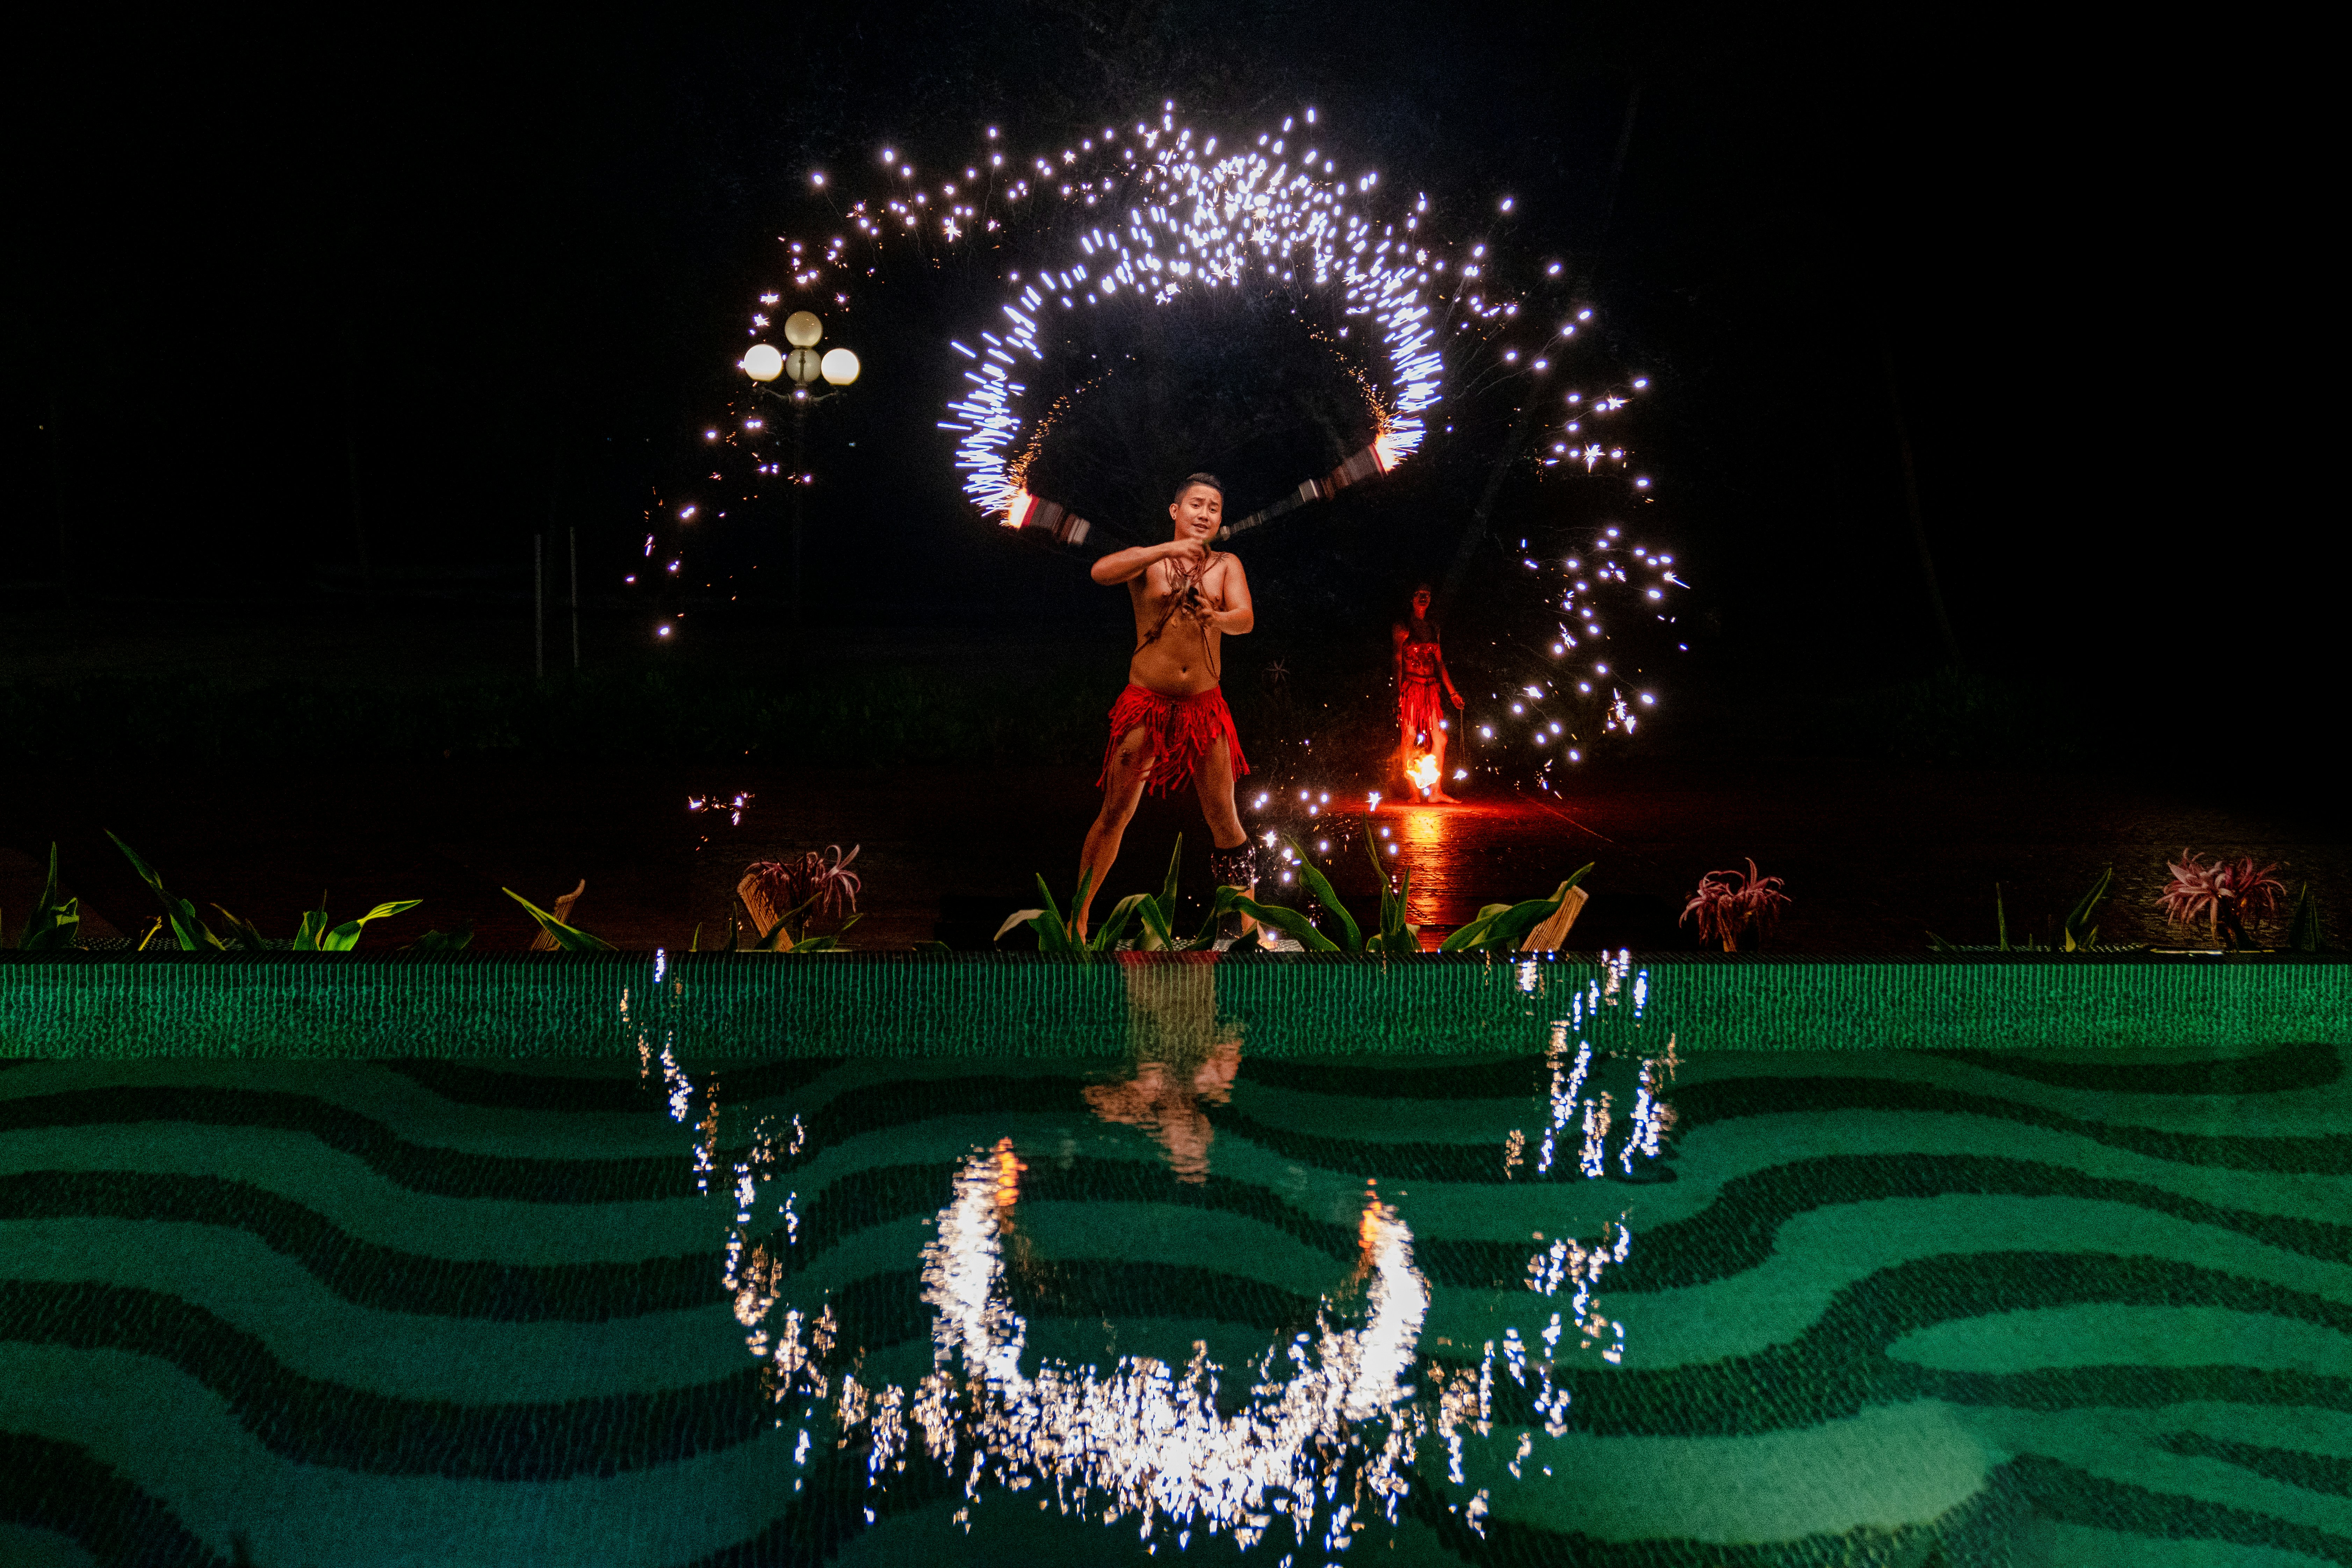 man fire dancing beside body of water